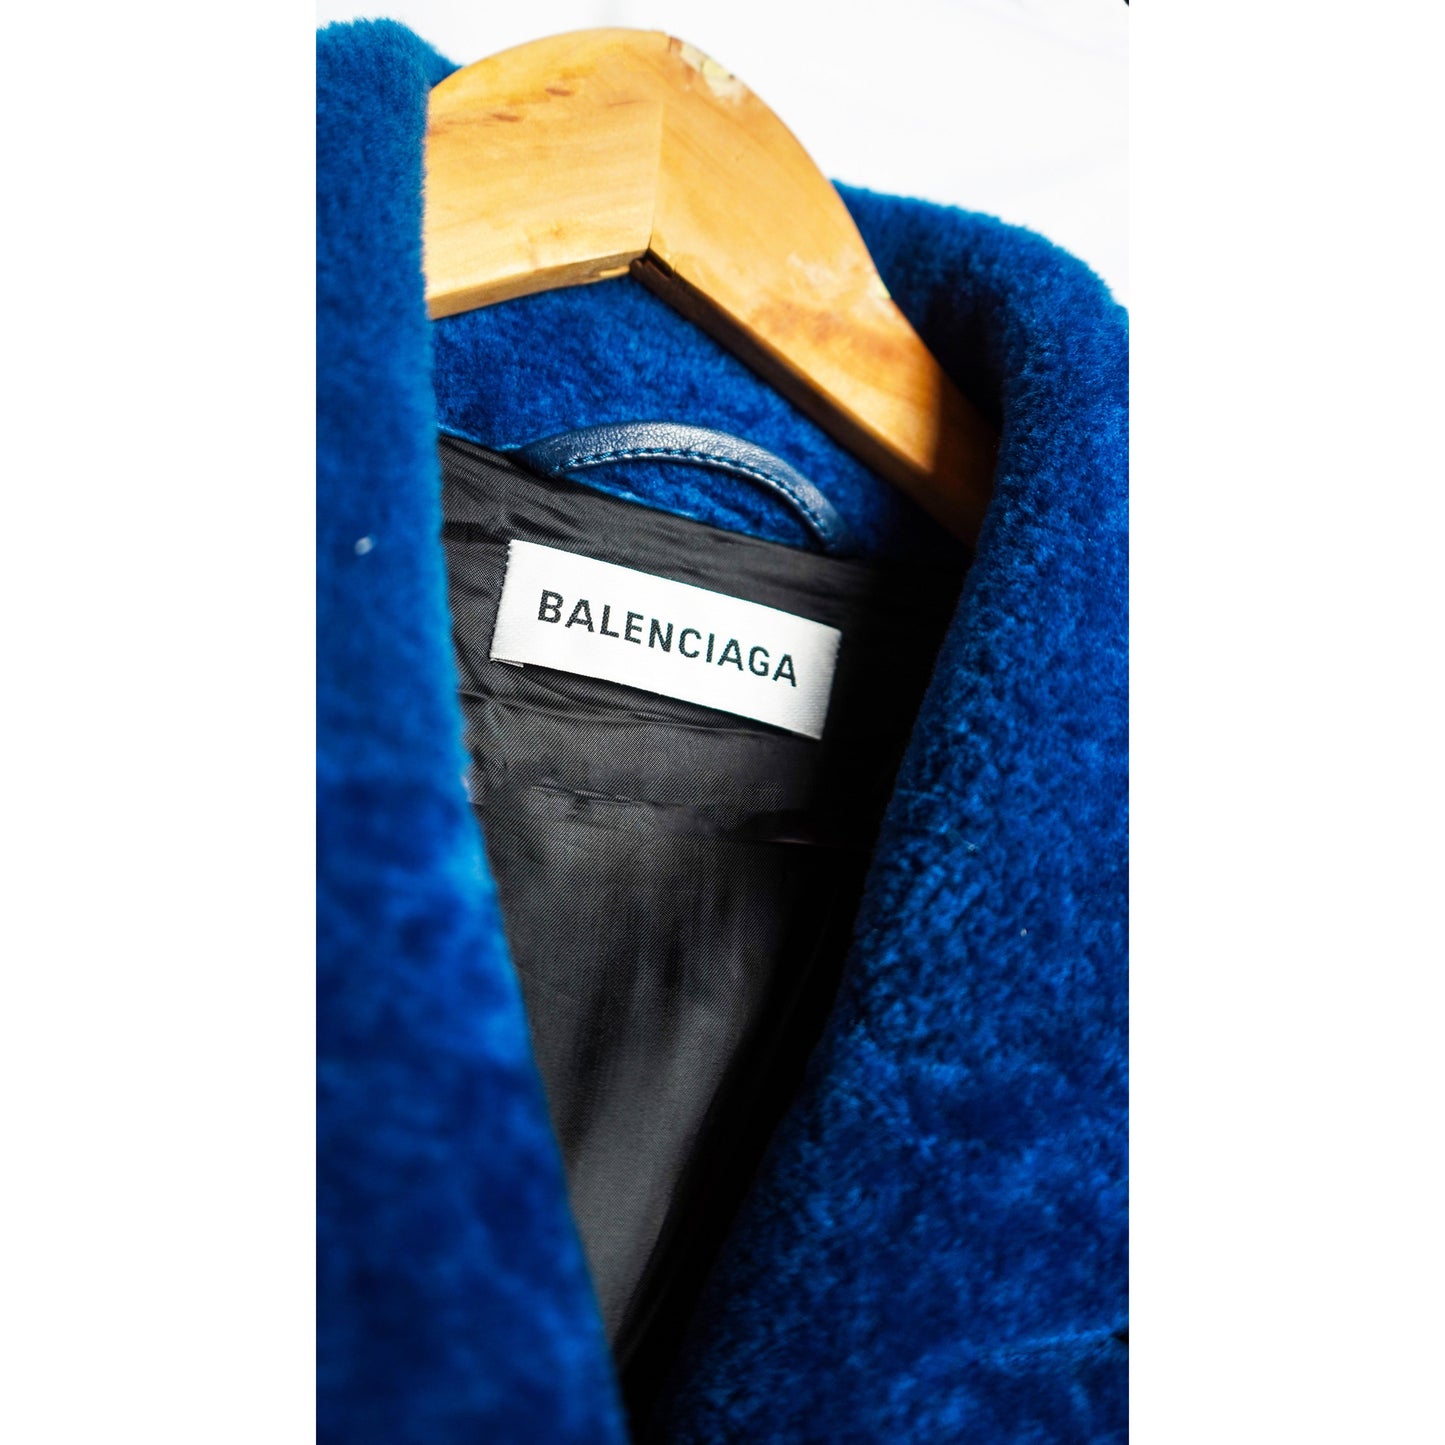 BALENCIAGA Faux fur coat with hourglass waist Size 36/38